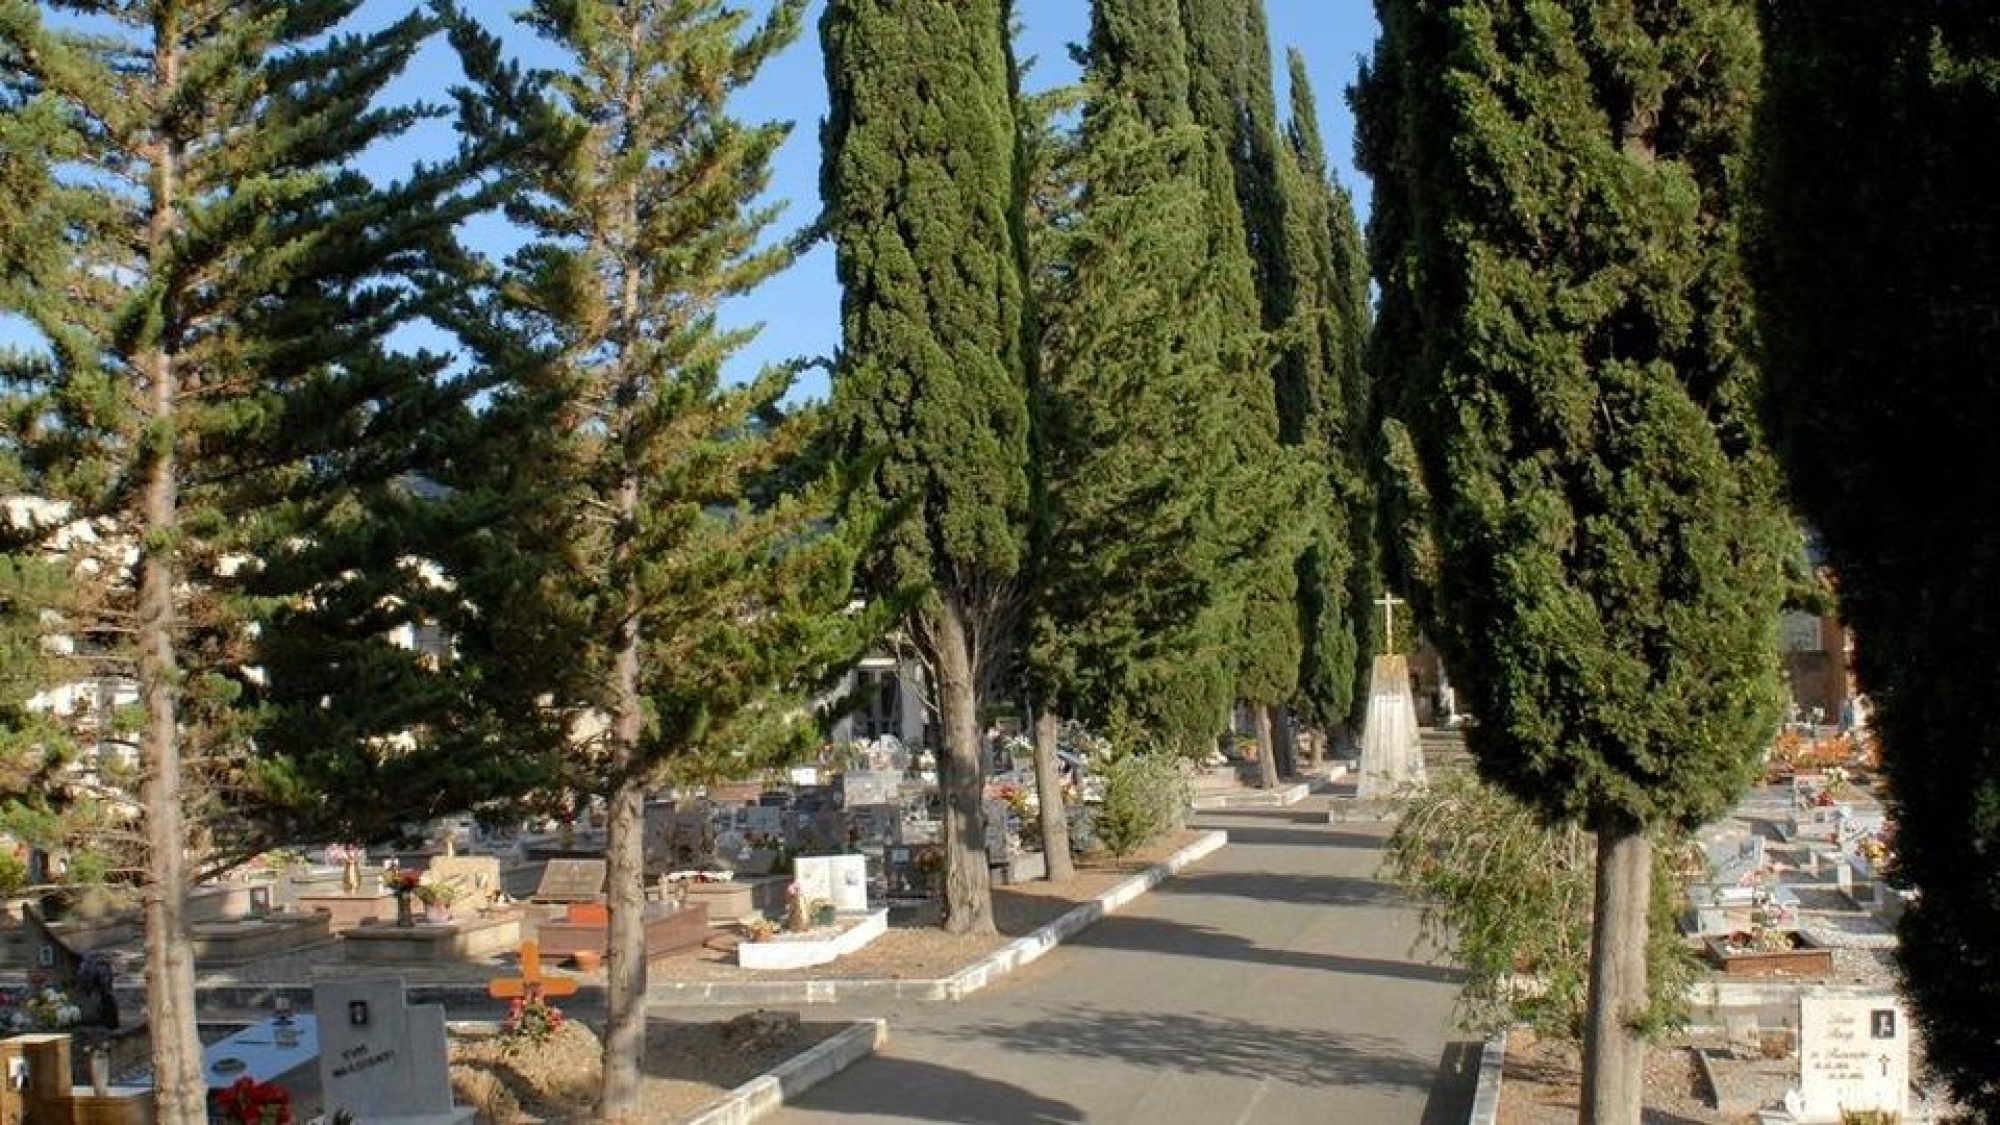 Chiusura temporanea del cimitero di Caldana